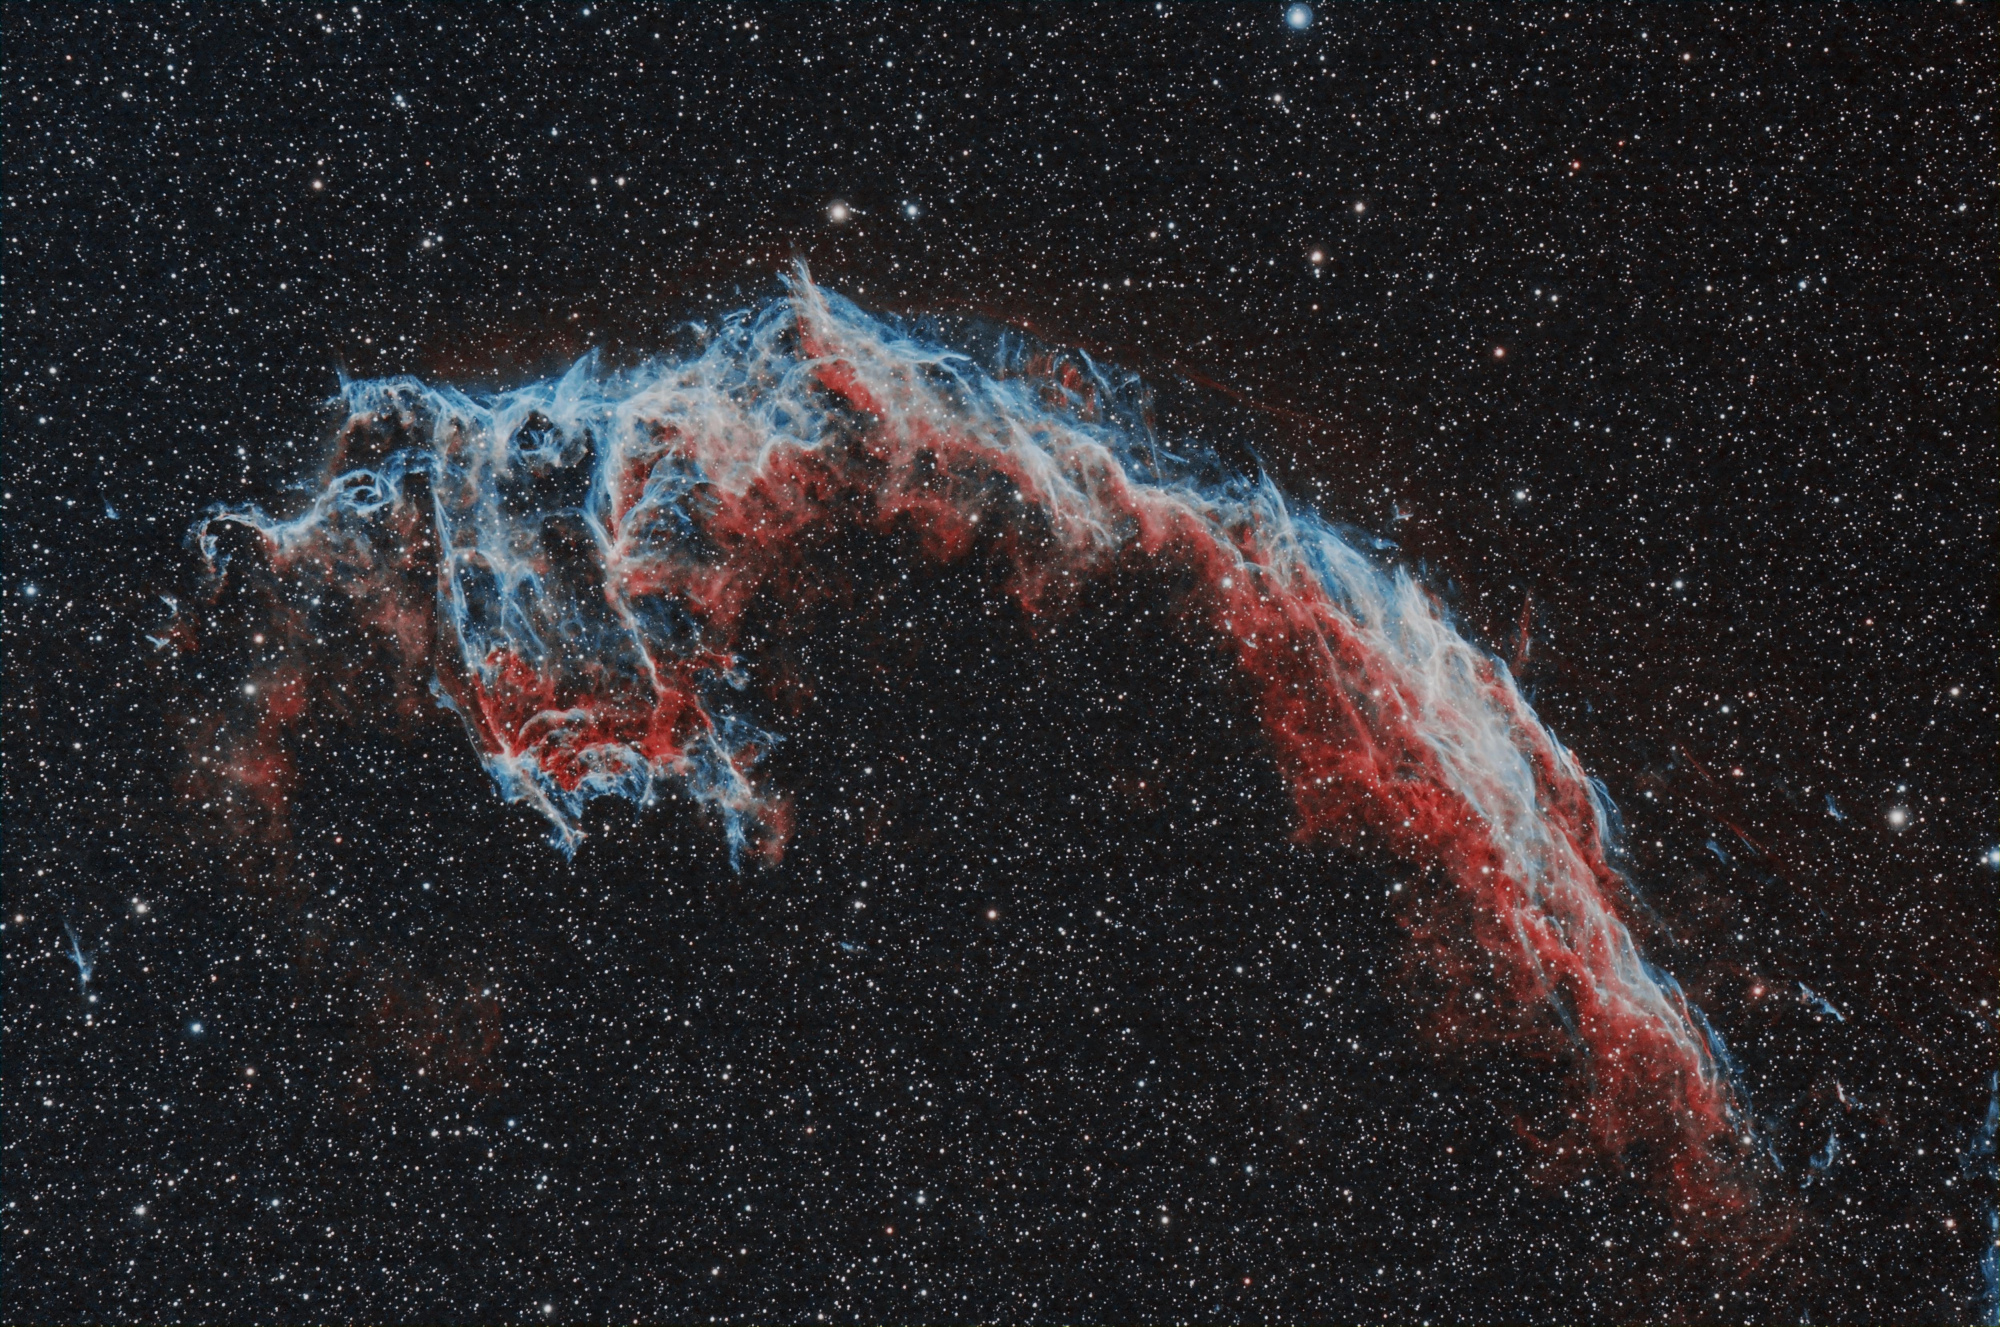 NGC_6992_SIRIL-HOO-2-iris-1-cs5-7-FINAL-4.jpg